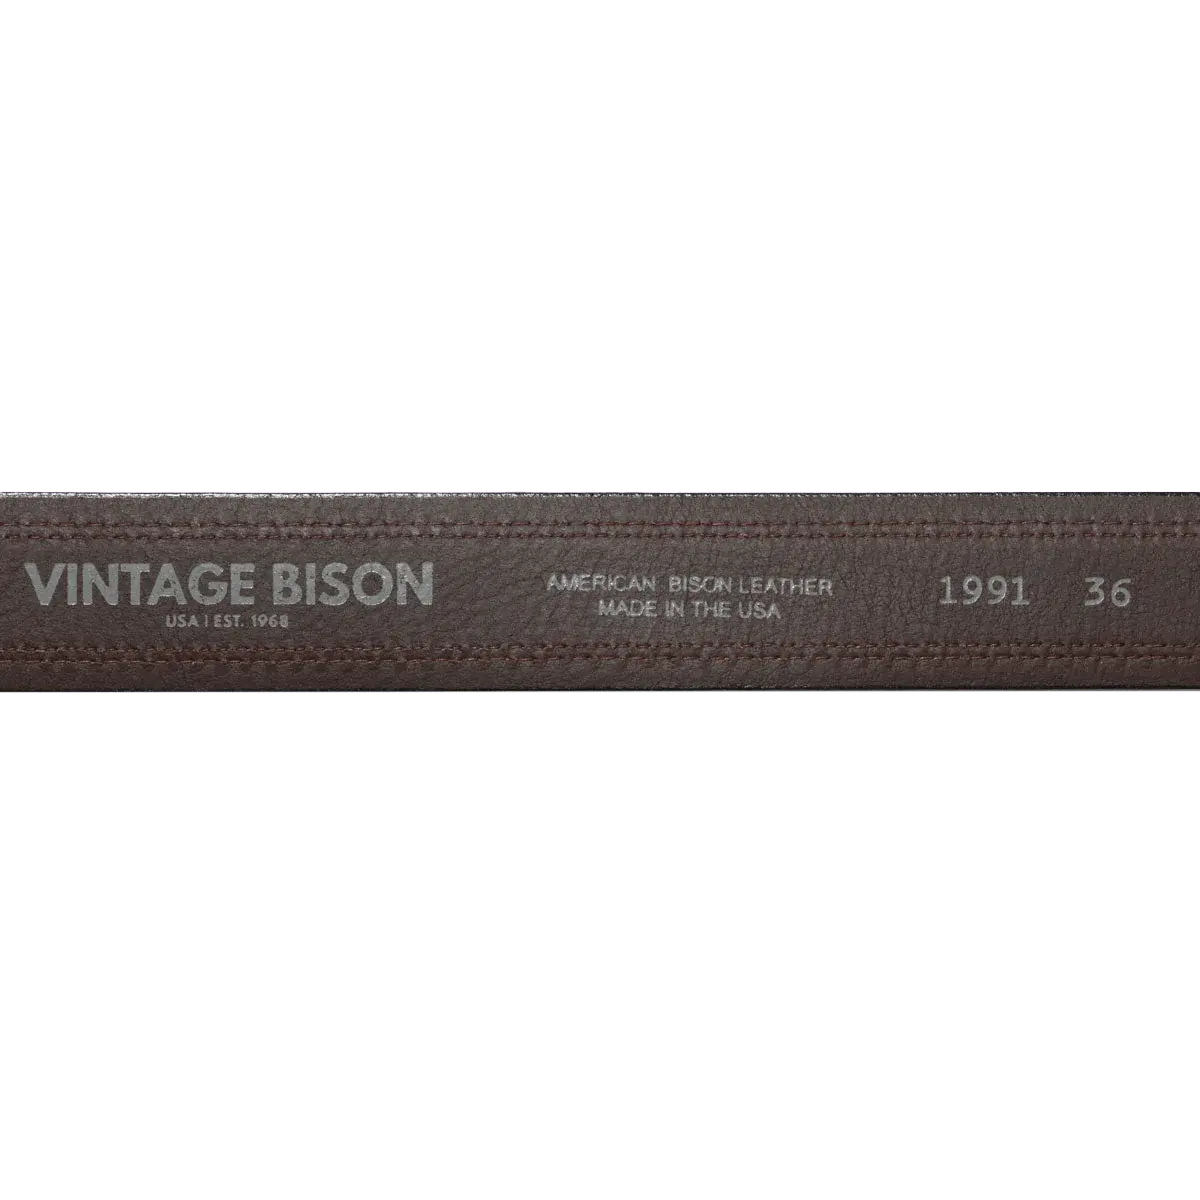 GETTYSBURG Vintage Bison USA